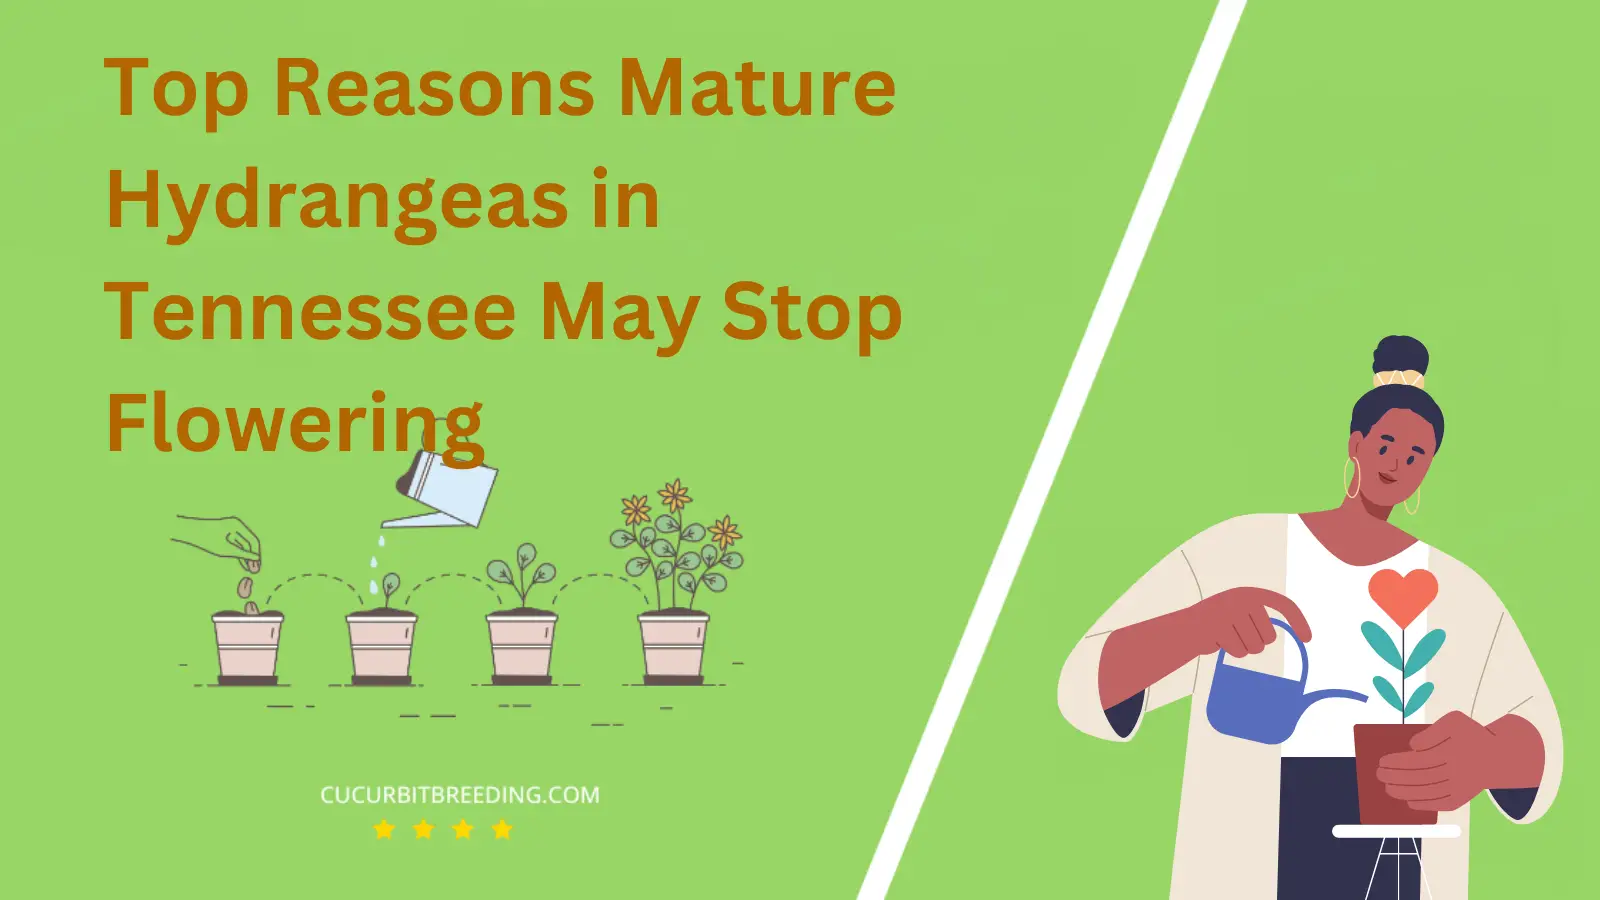 Top Reasons Mature Hydrangeas in Tennessee May Stop Flowering